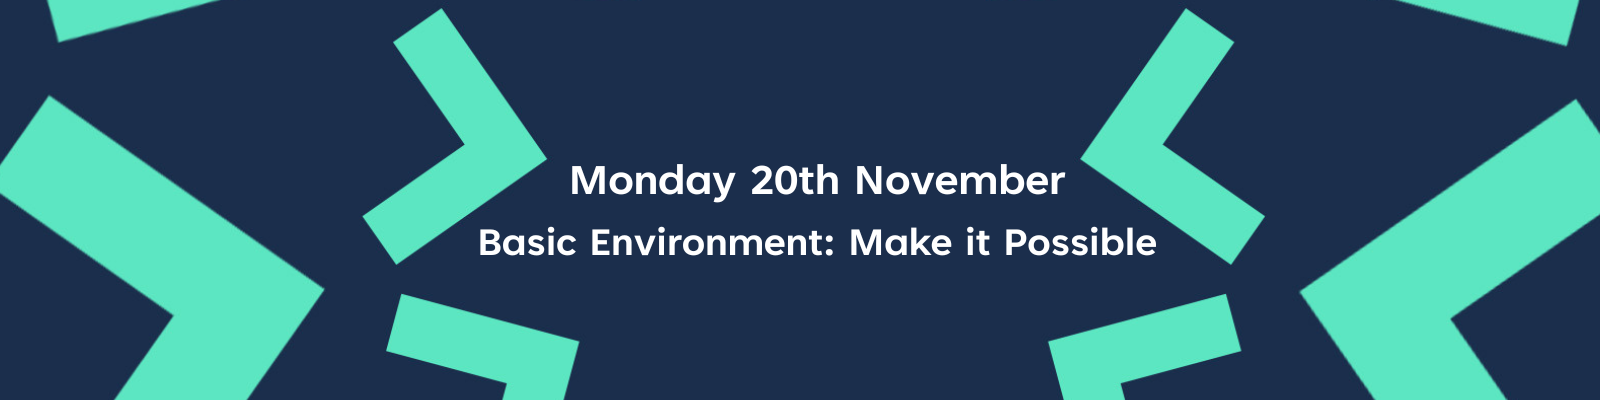 Monday 20th November: Basic Environment: Make it Possible